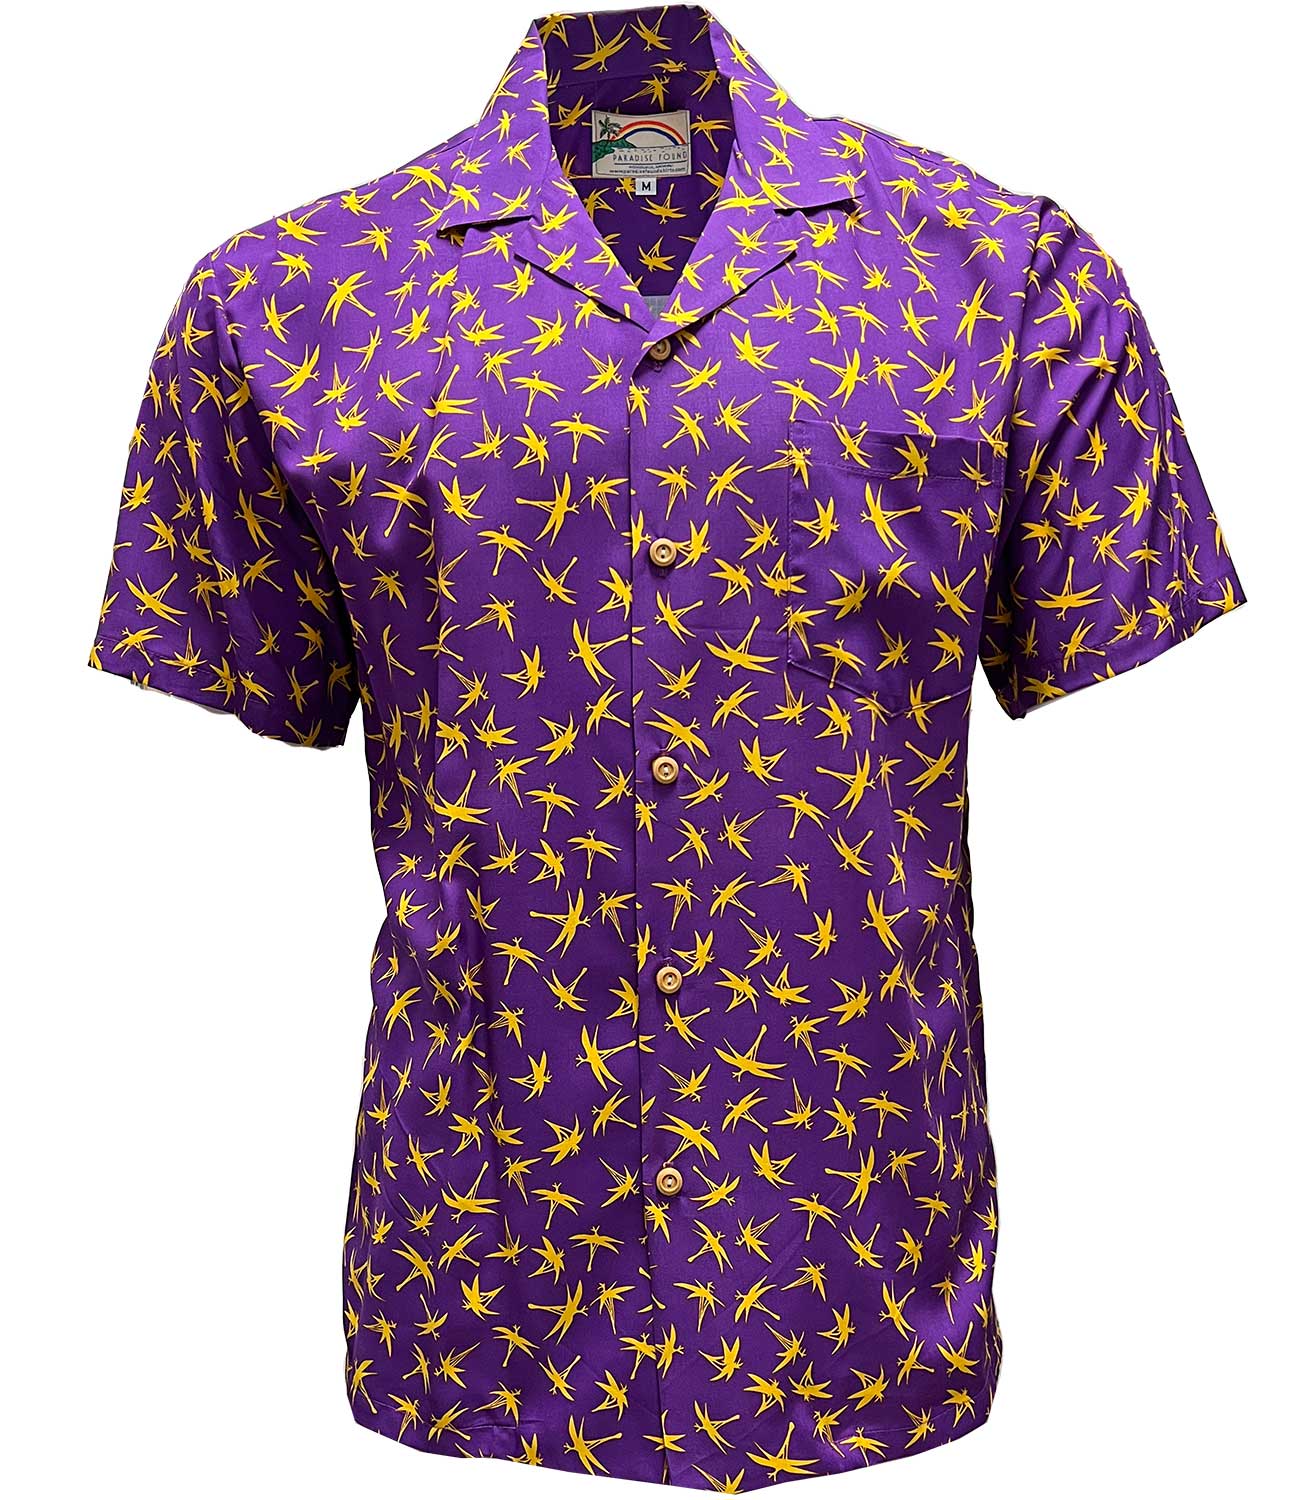 Magnum Bamboo purple Hawaiian shirt by Paradise Found